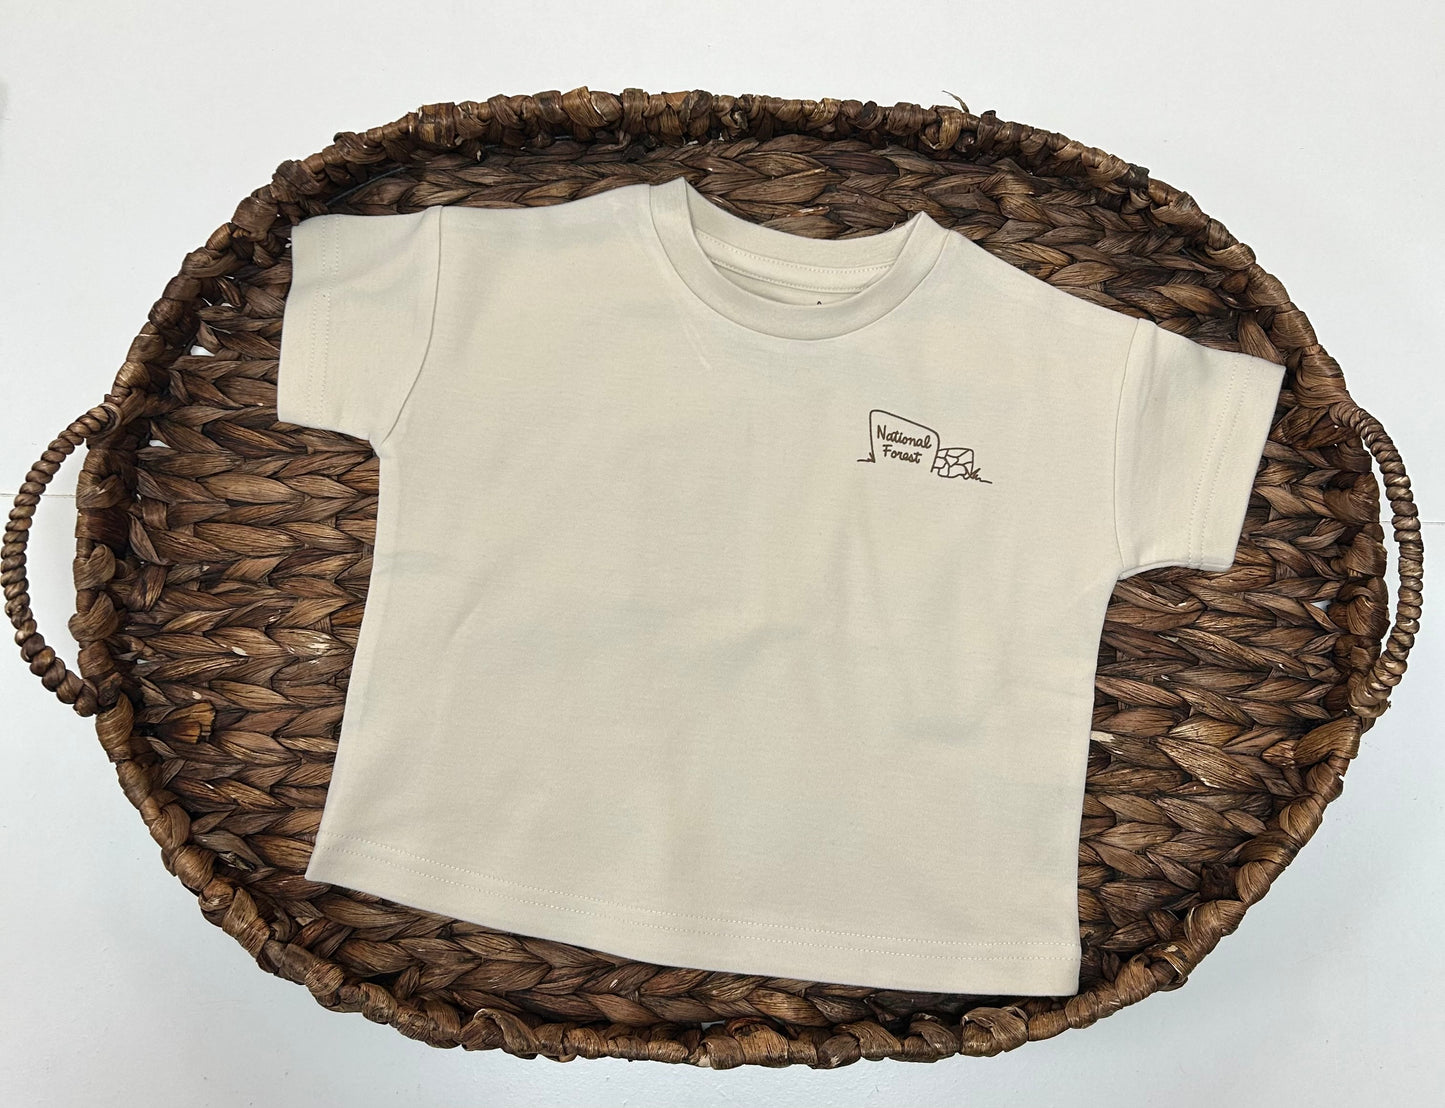 Viscose Bamboo + Organic Cotton T-shirt - National Forest